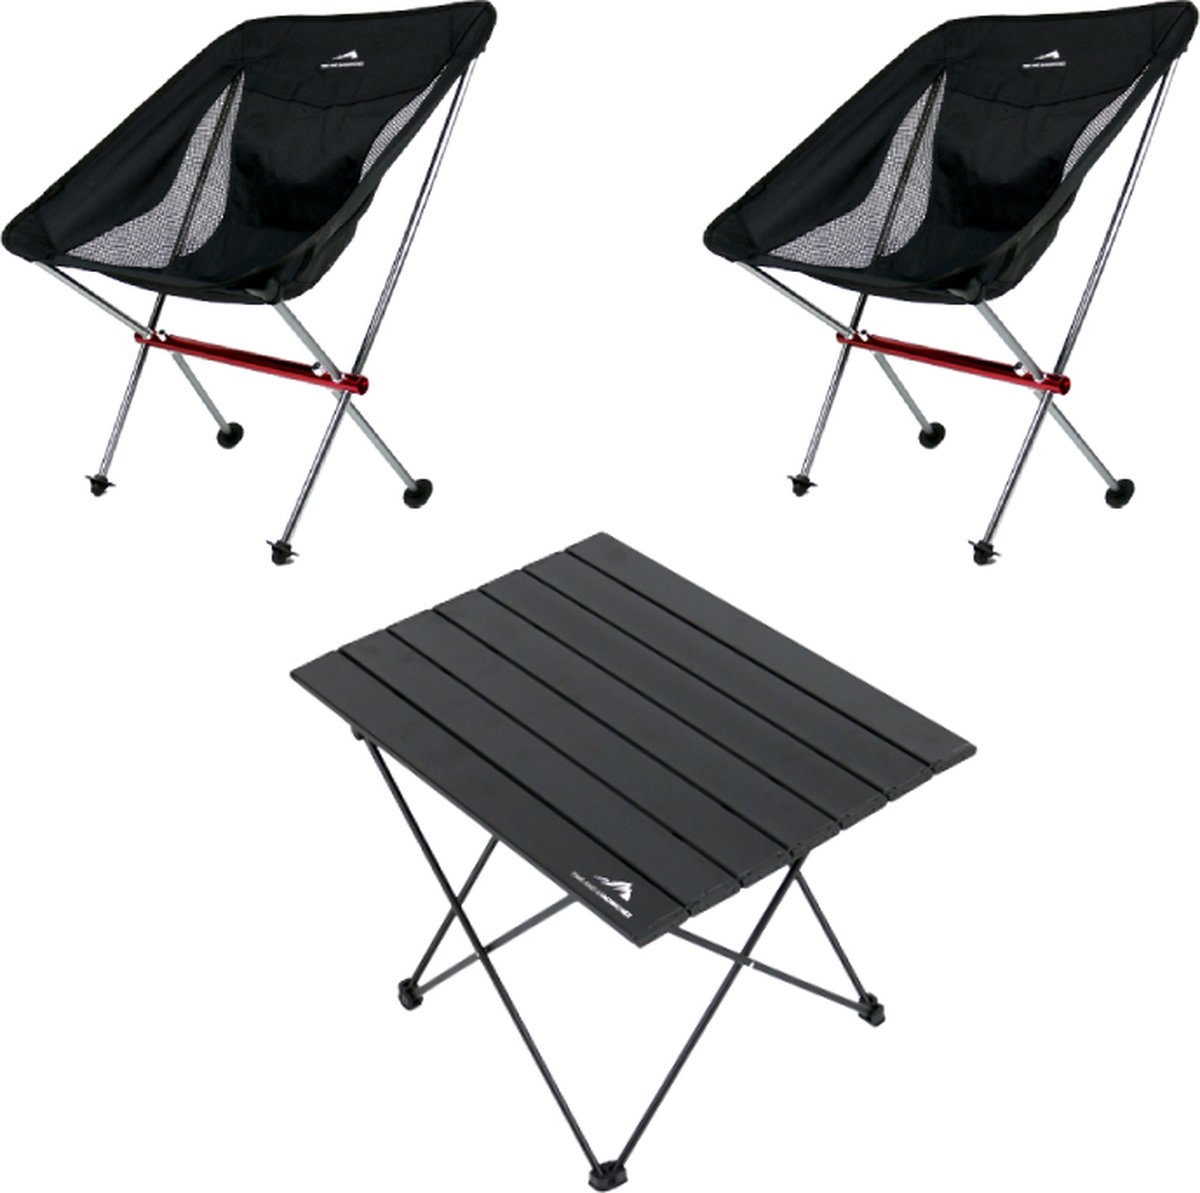 TS - Small Set - Kampeerset 2 stoelen + 1 tafel - Ultra lichtgewicht - Compact - Aluminium - Camping stoel tafel - Supersterk - Opvouwbaar - Inklapbaar - Visstoel – Vouwstoel – Strandstoel - Picknicktafel